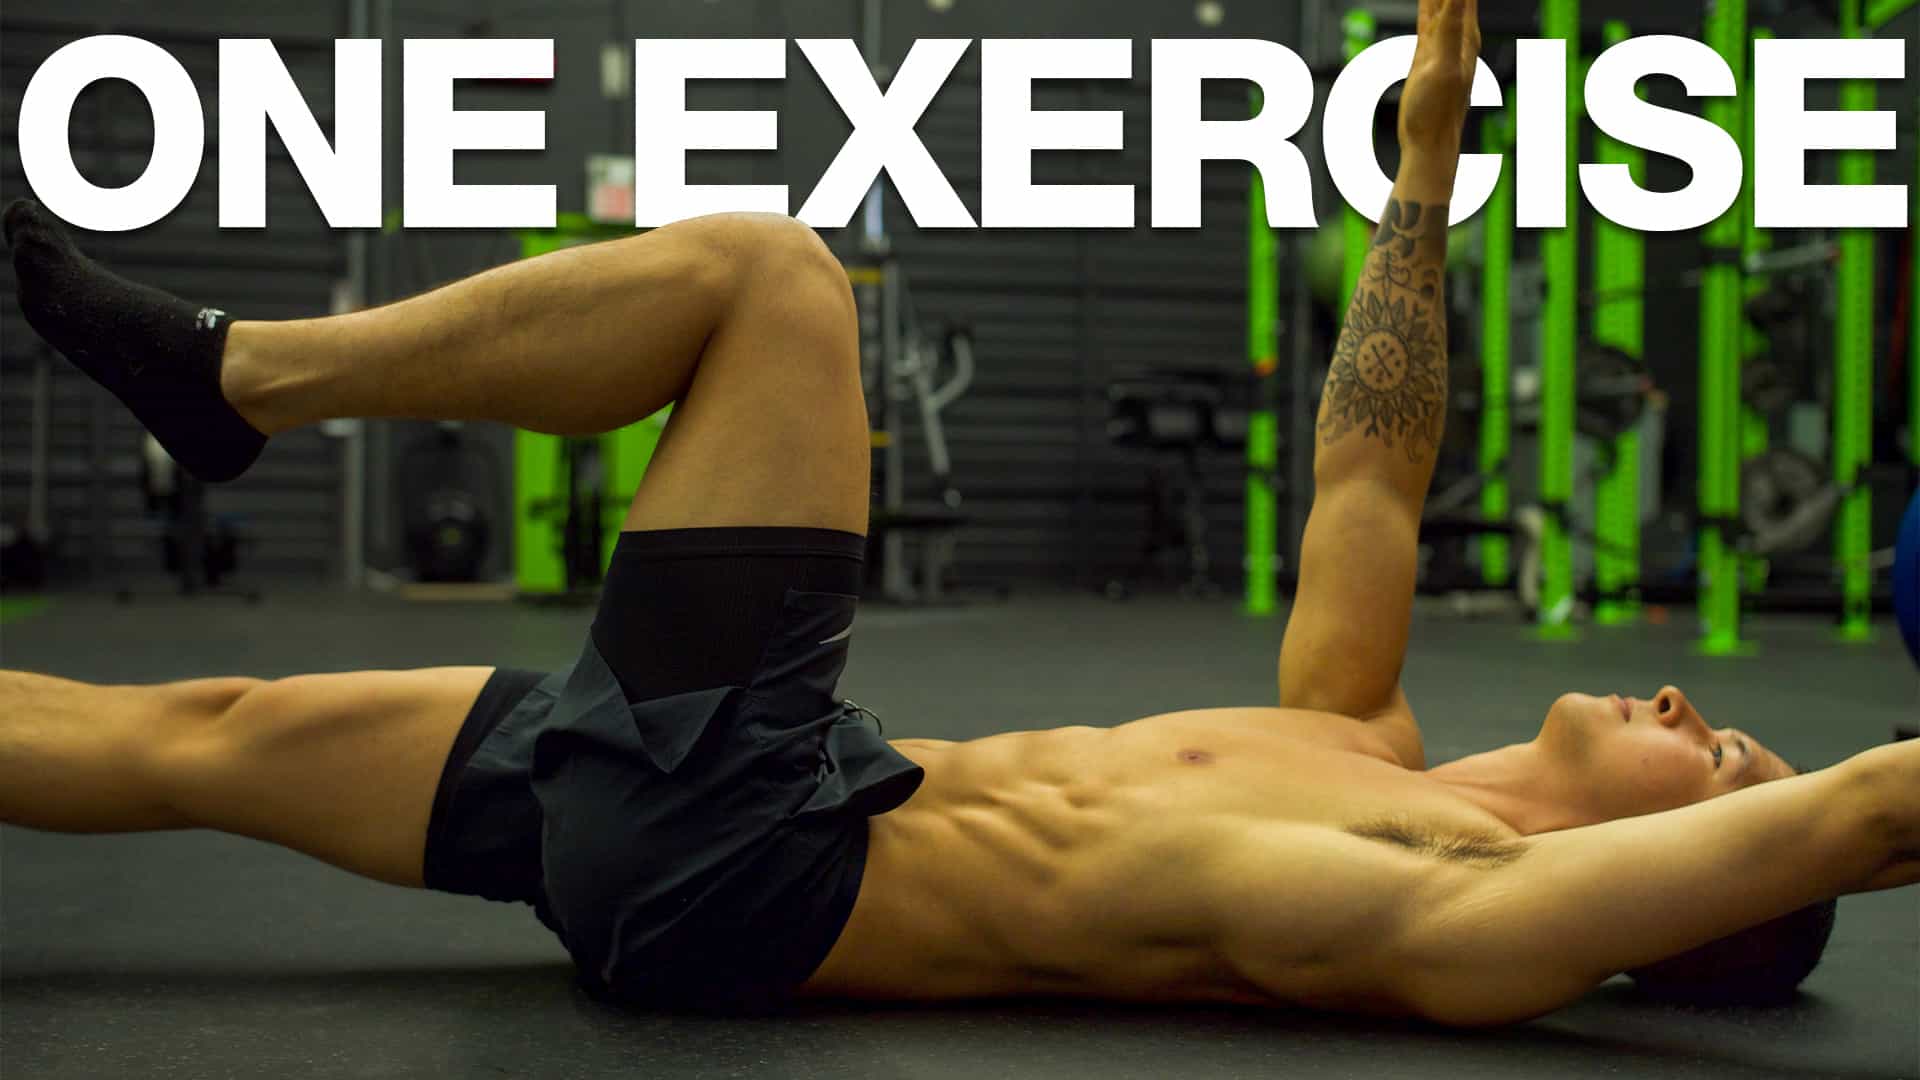 Core Strengthening Exercises